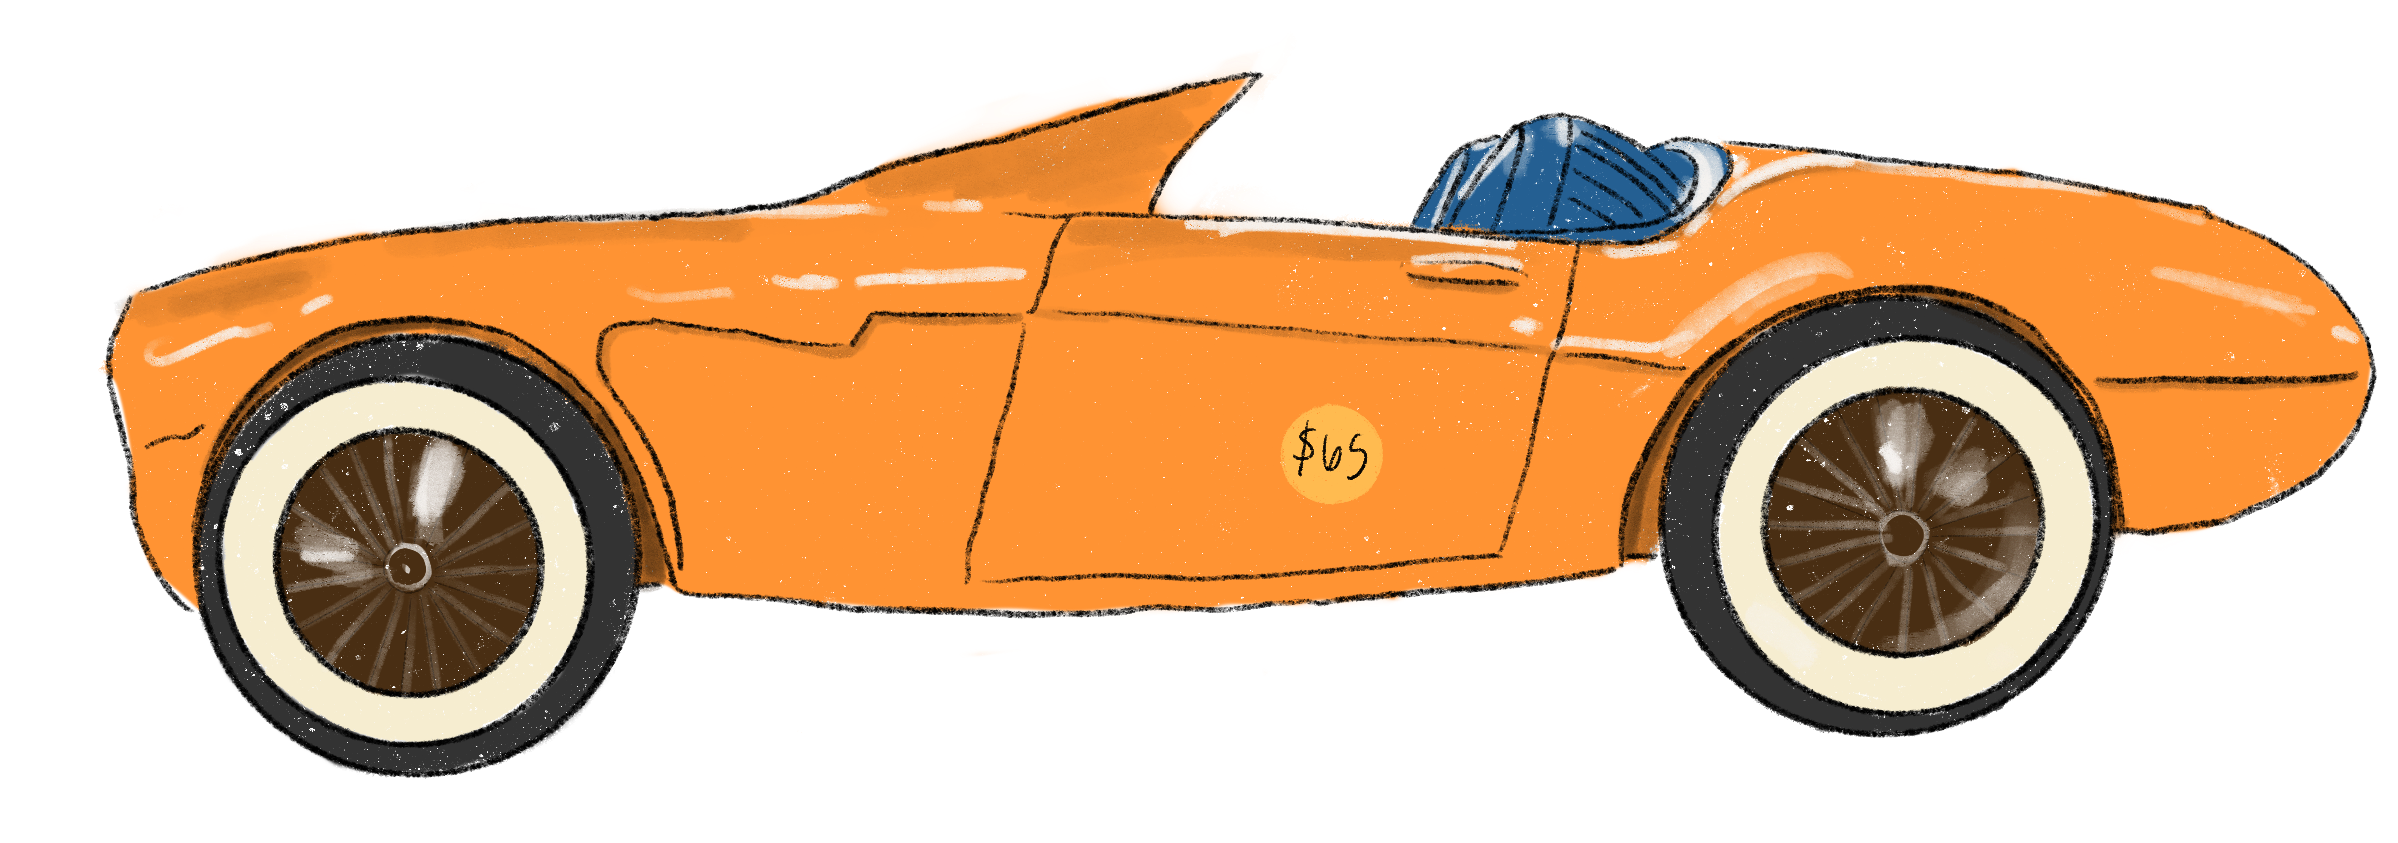 An illustration of an orange plastic toy car.